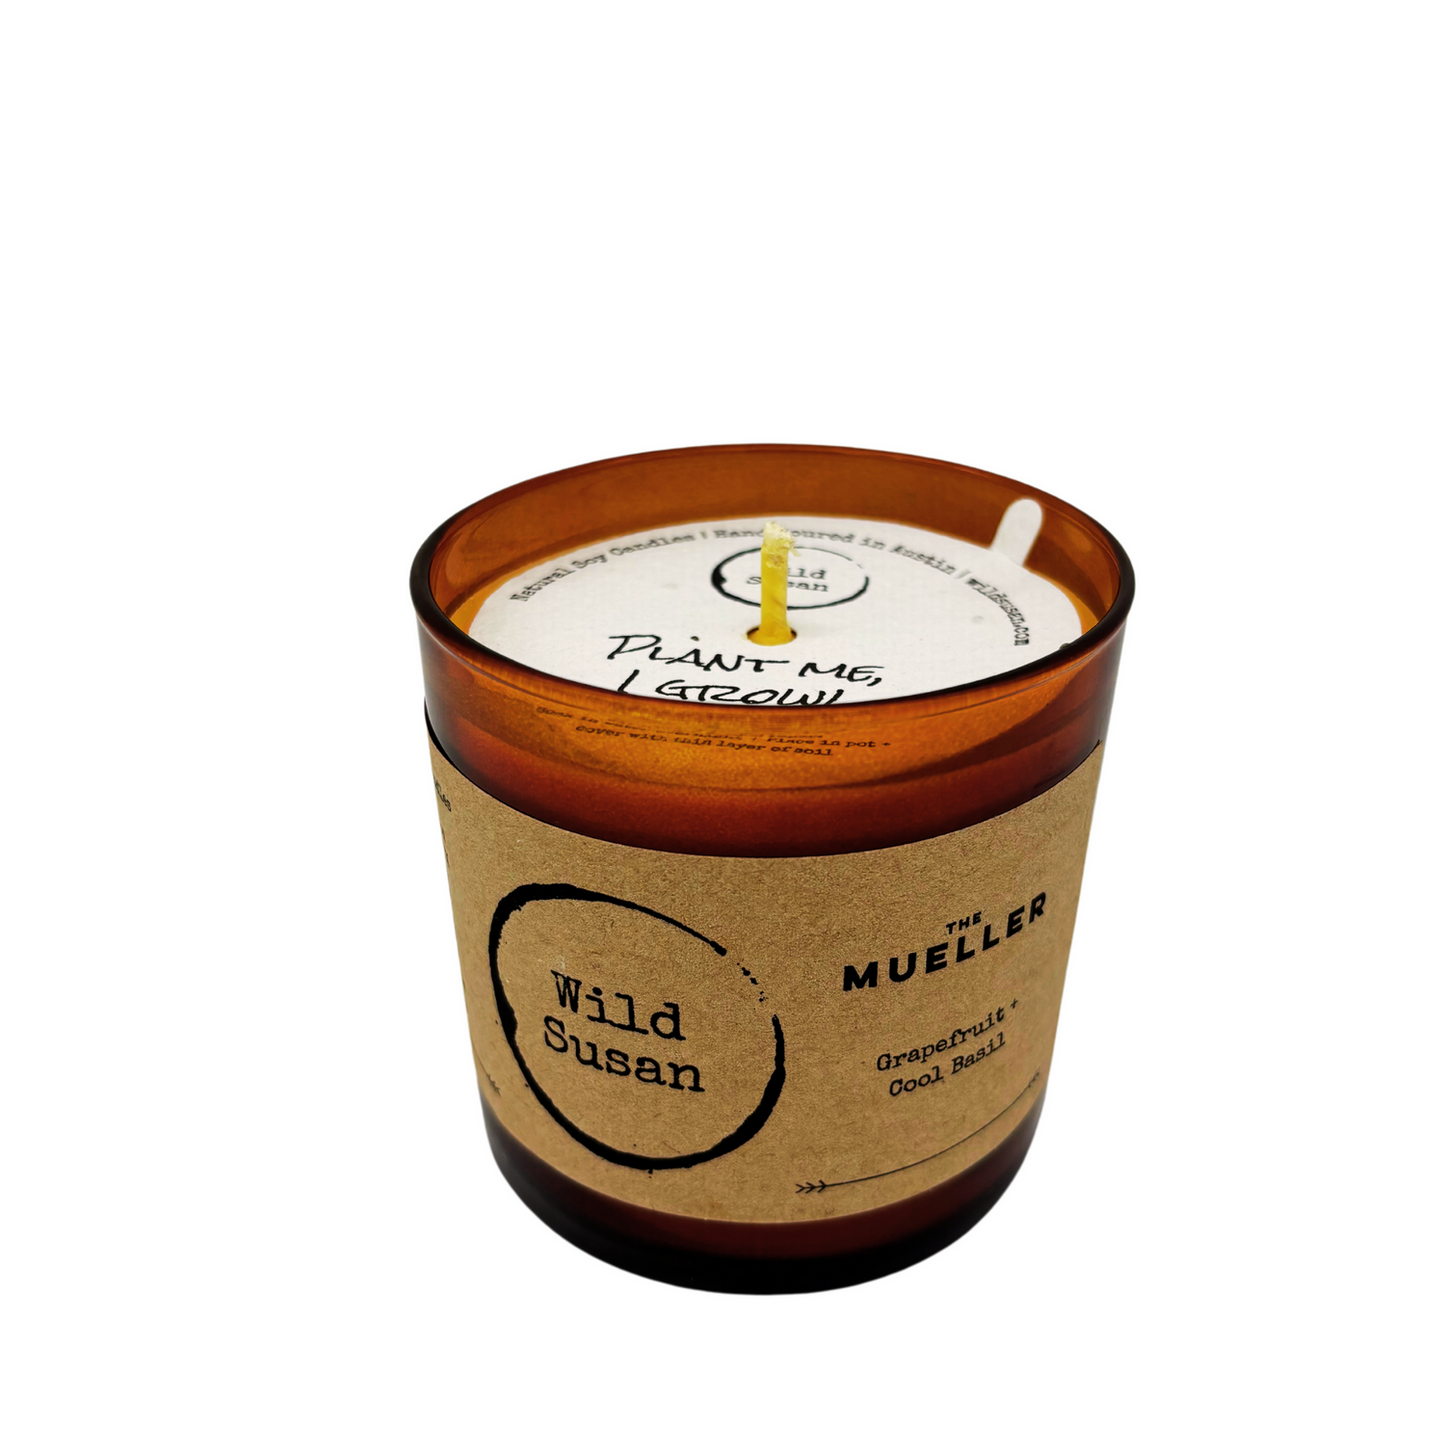 Mueller [Grapefruit + Cool Basil] Soy Candle/Wax Melt